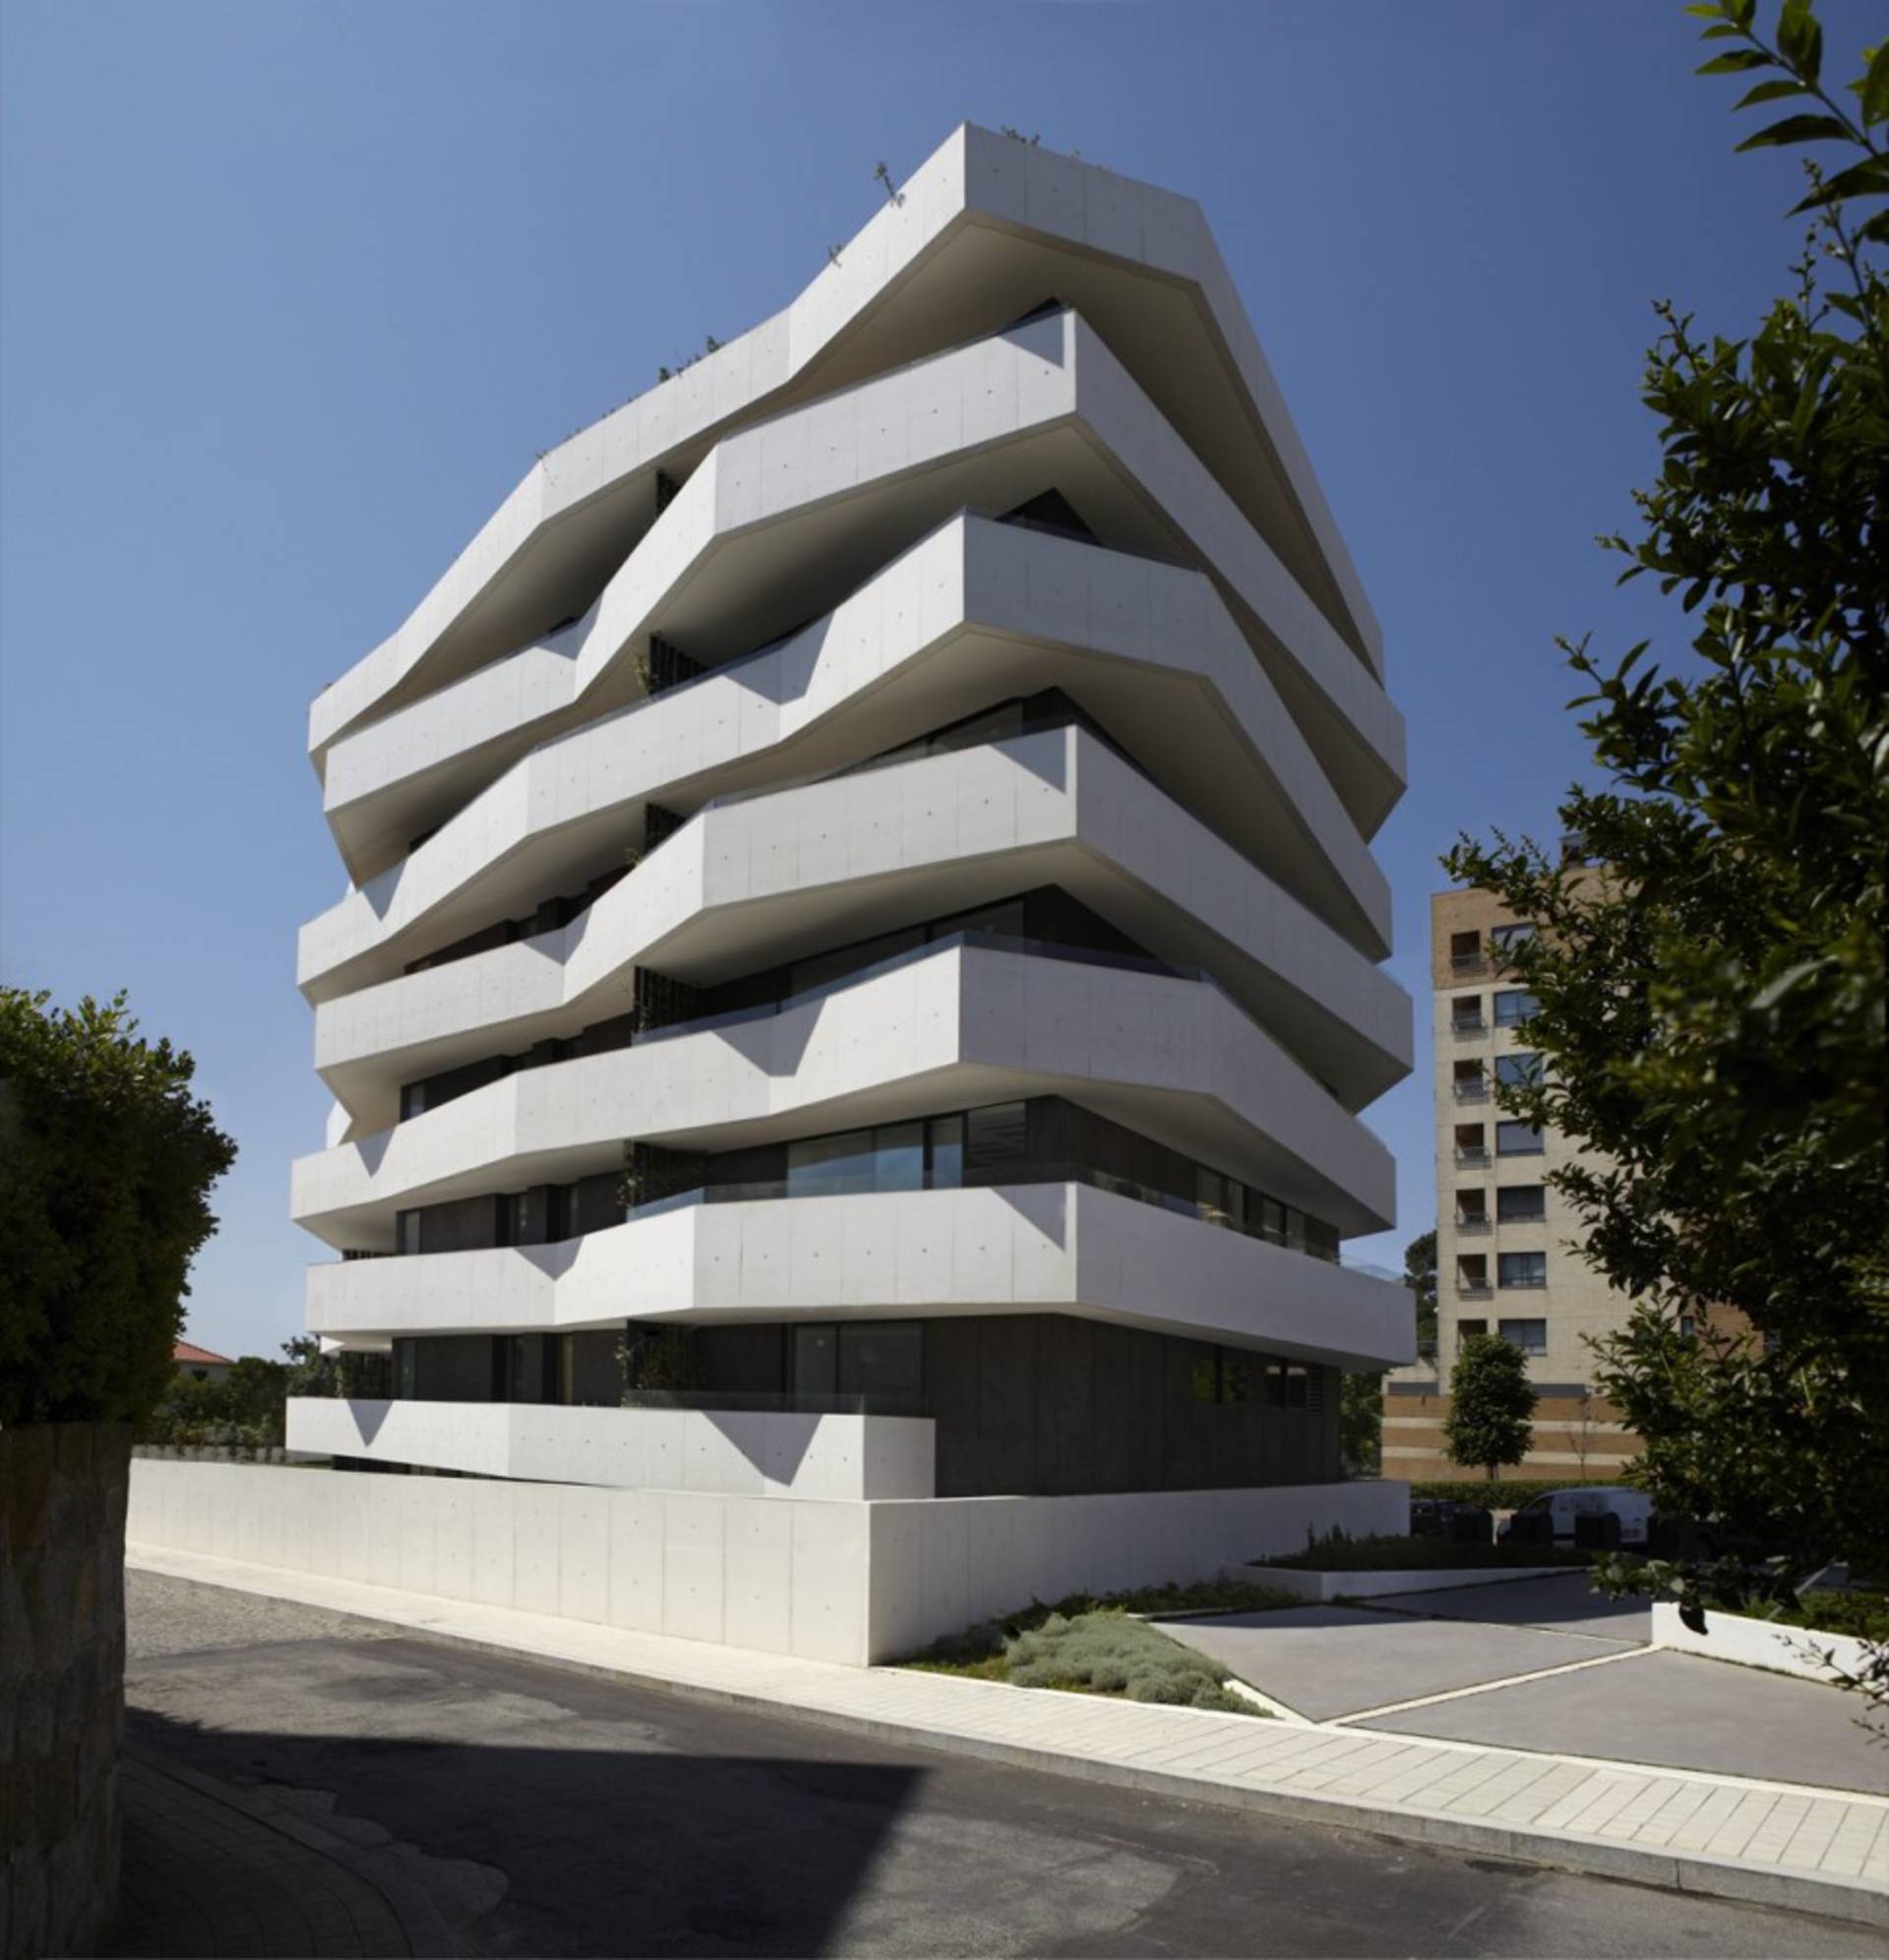 geometric-apartment-building-by-demm-arquitectura-1.jpg